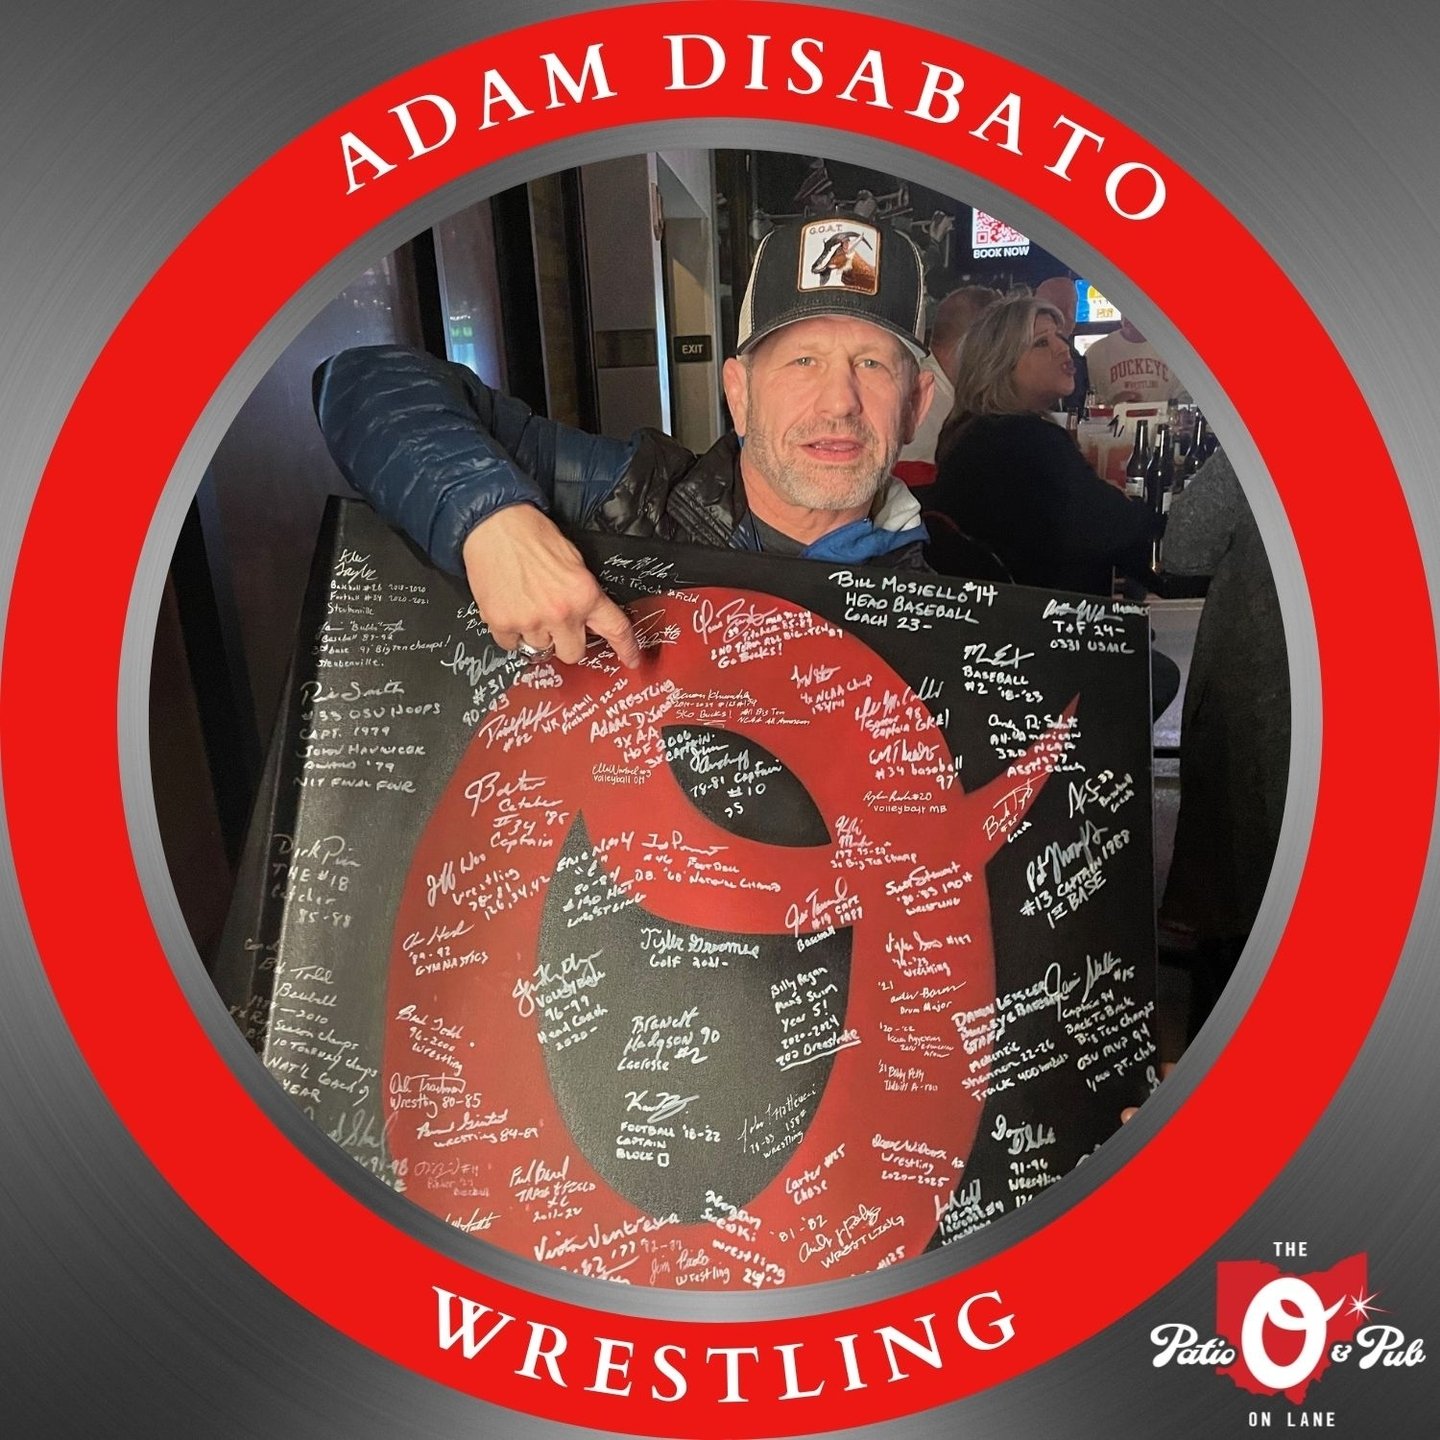 ⭐️ ADAM DISABATO, OSU wrestling 3X All American and Team Captain, made his mark at The ⭕ on Lane! #ohiostatealumni #gobucks #ohiostatebuckeyes